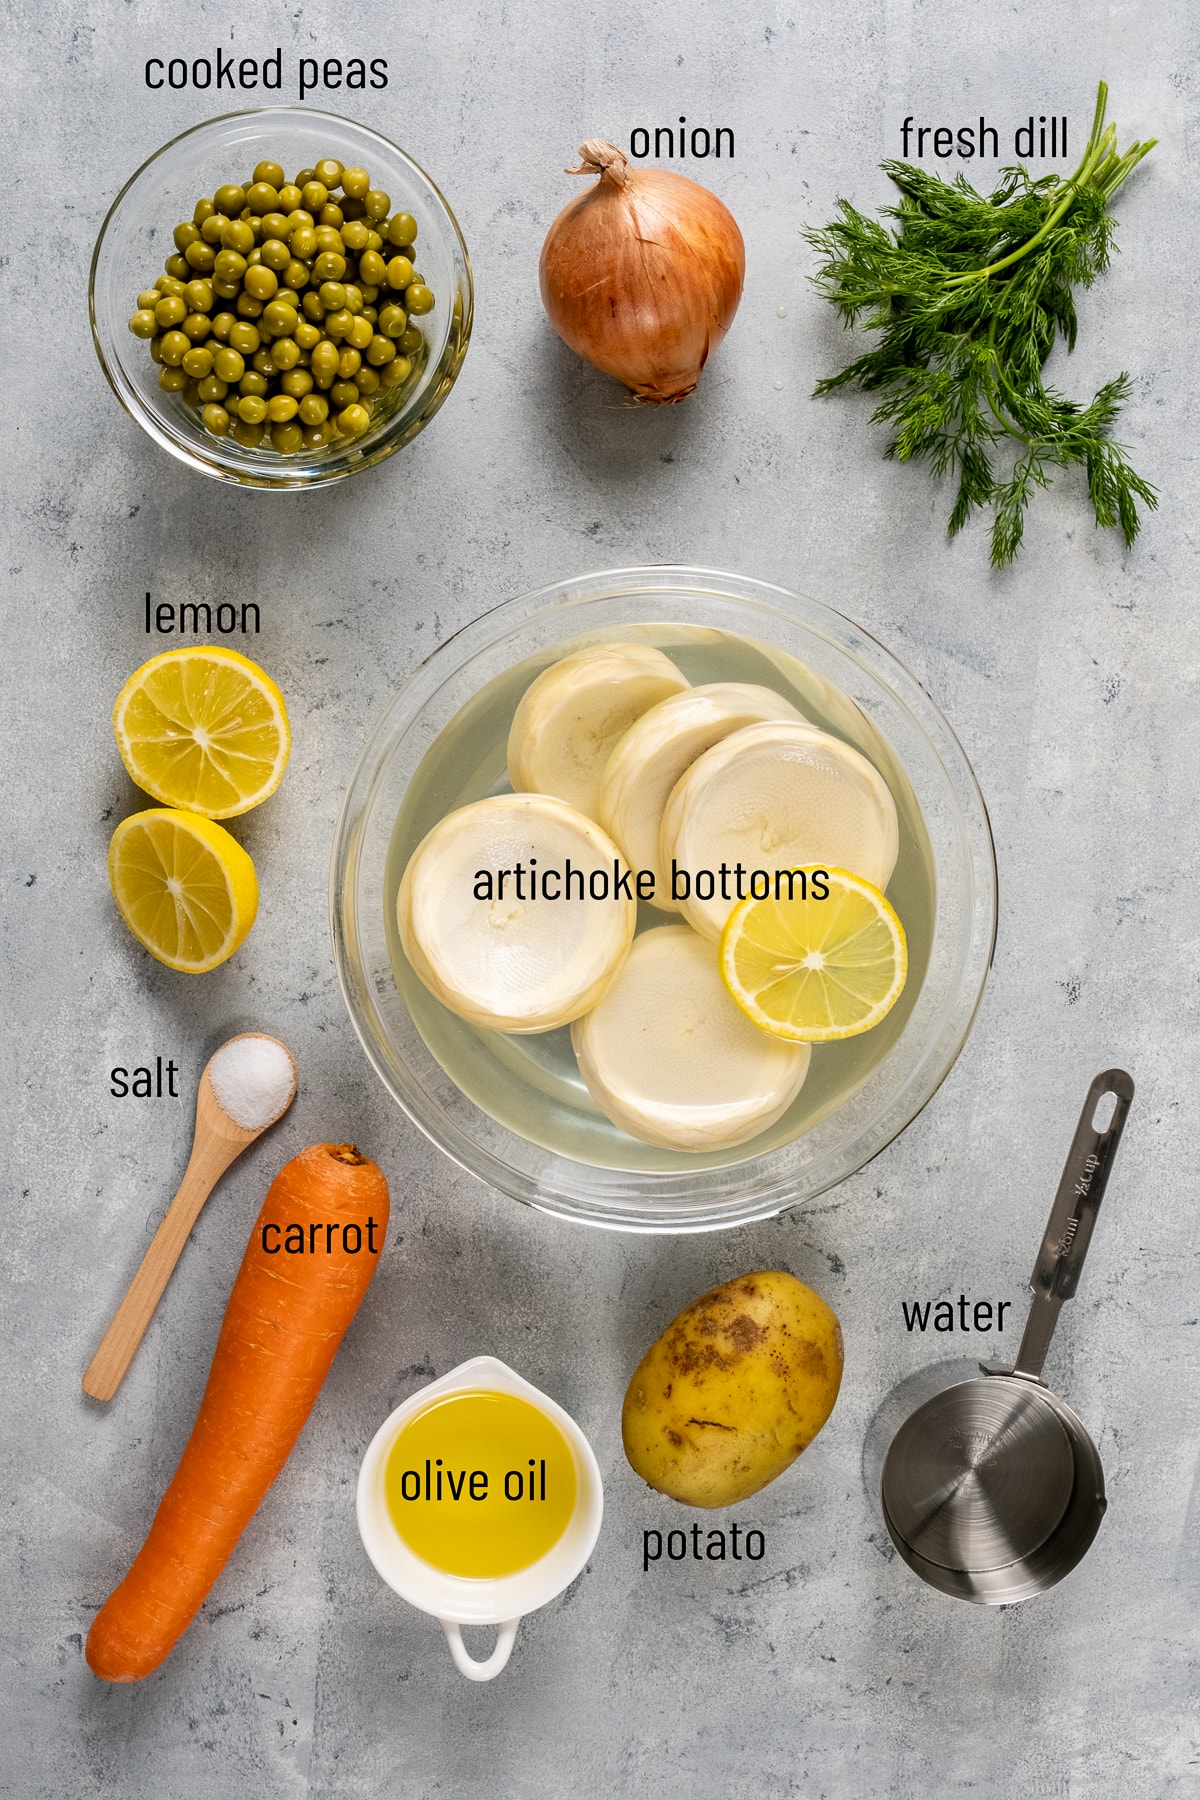 Artichoke bottoms, peas, onion, fresh dill, lemon, carrot, potato and olive oil on a grey background.